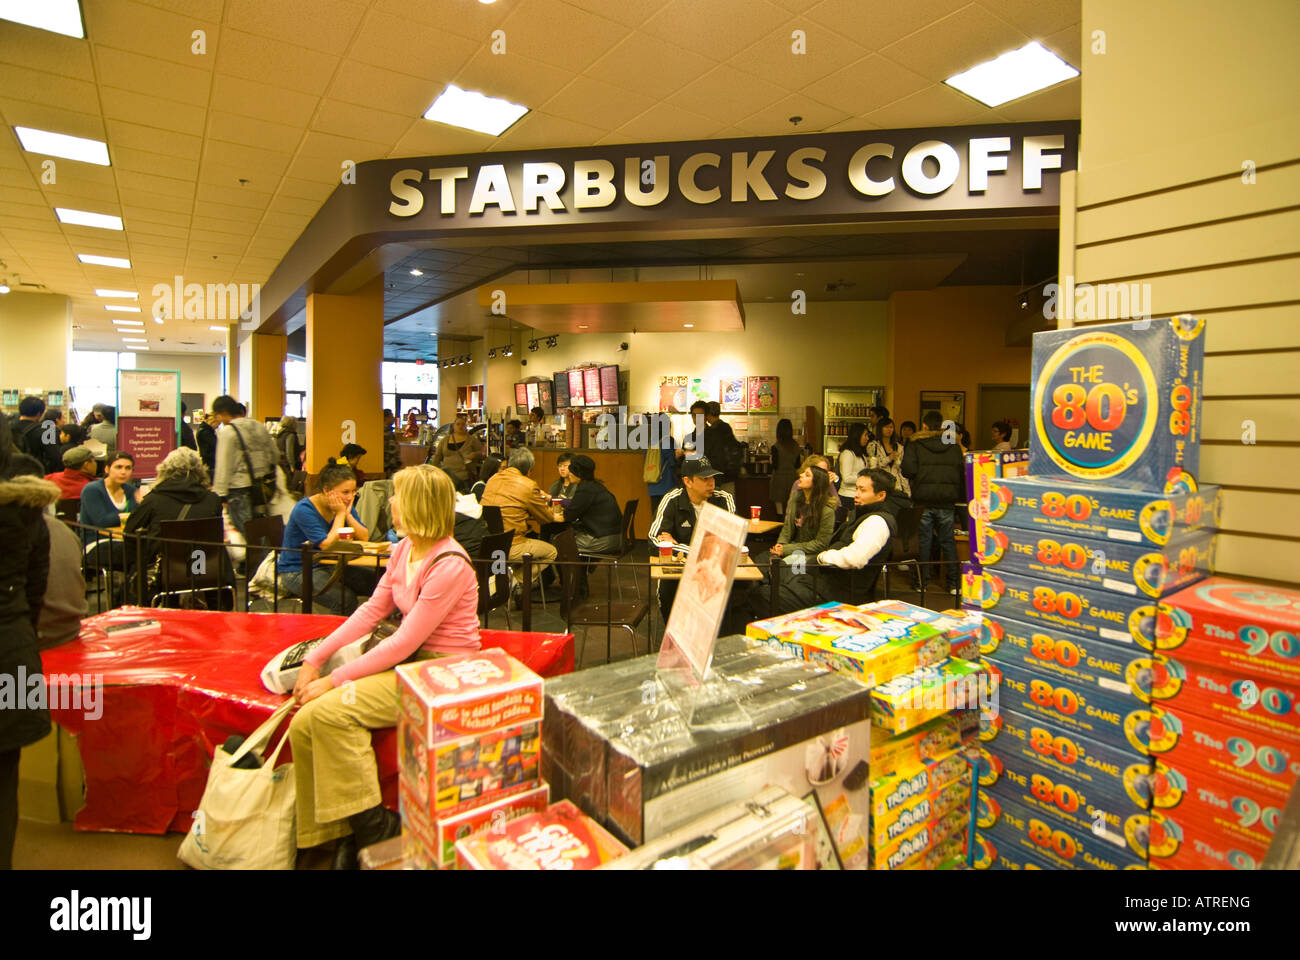 Starbucks at Chapters bookshop, Metropolis mall, Metrotown, Kingsway, Vancouver, British Columbia, Canada Stock Photo